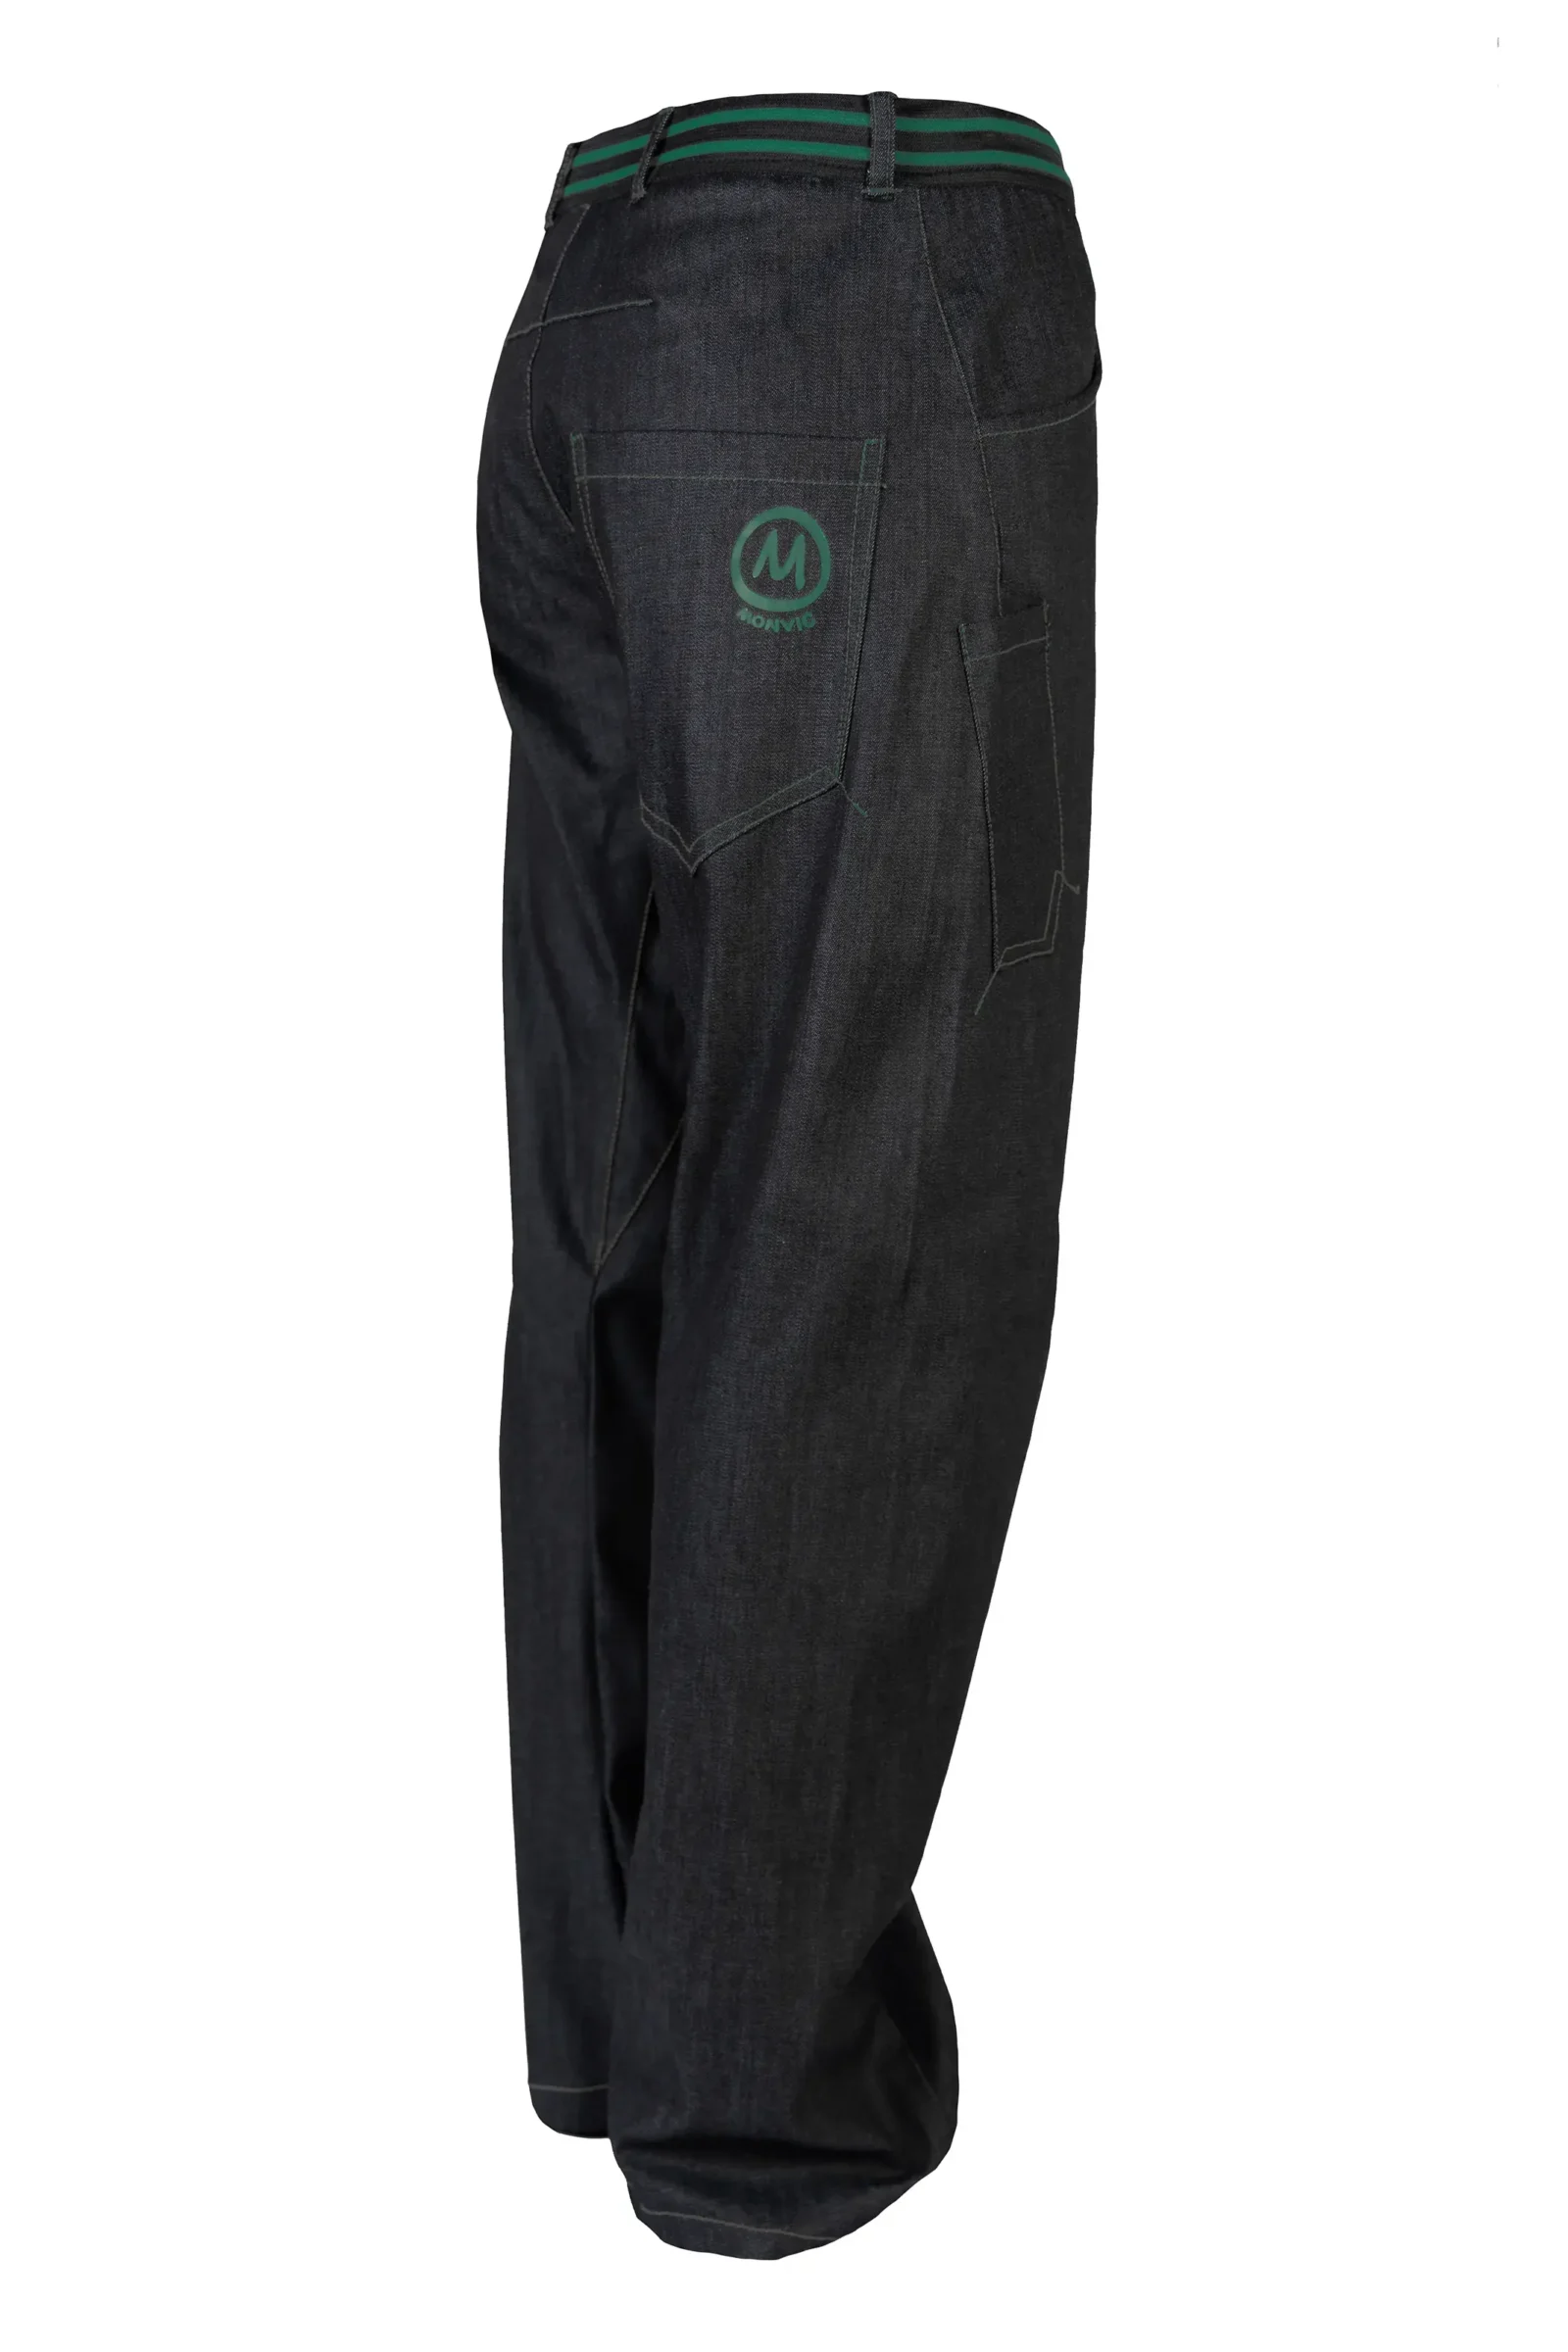 Pantalone Jeans climbing da uomo con elastico in vita - cuciture verdi - GEO STRIPES Monvic